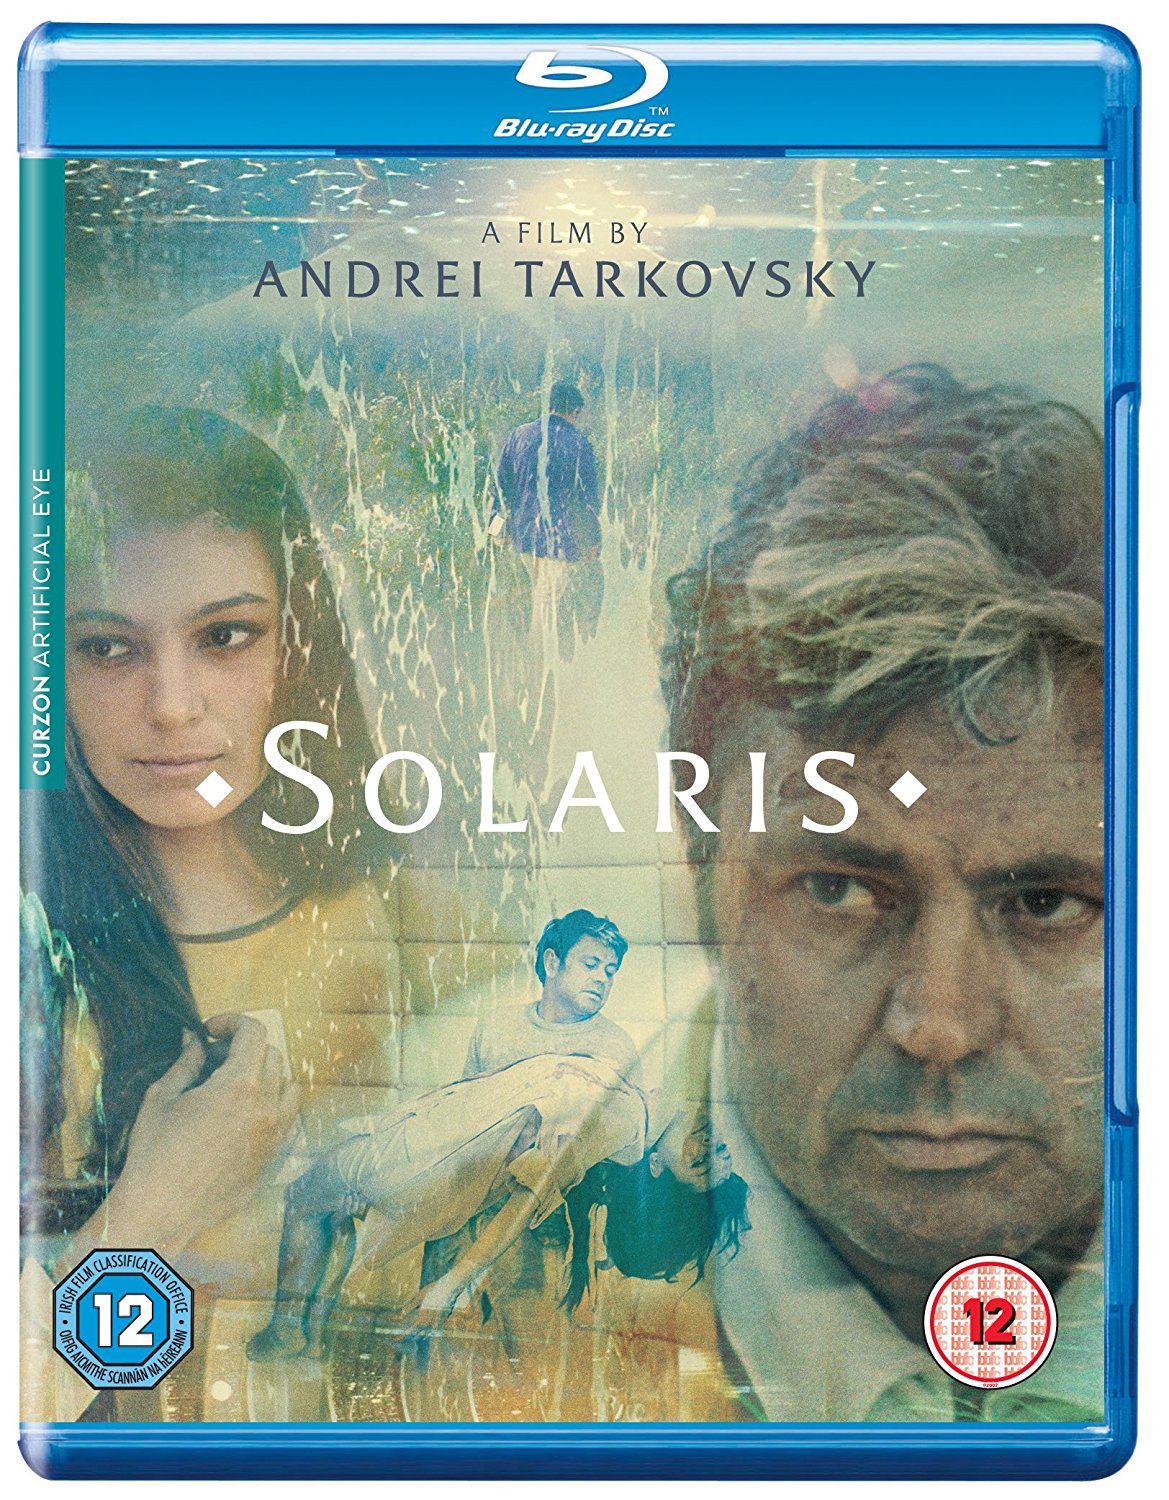 Solaris (Blu Ray Disc) / Solyaris | Andrei Tarkovsky